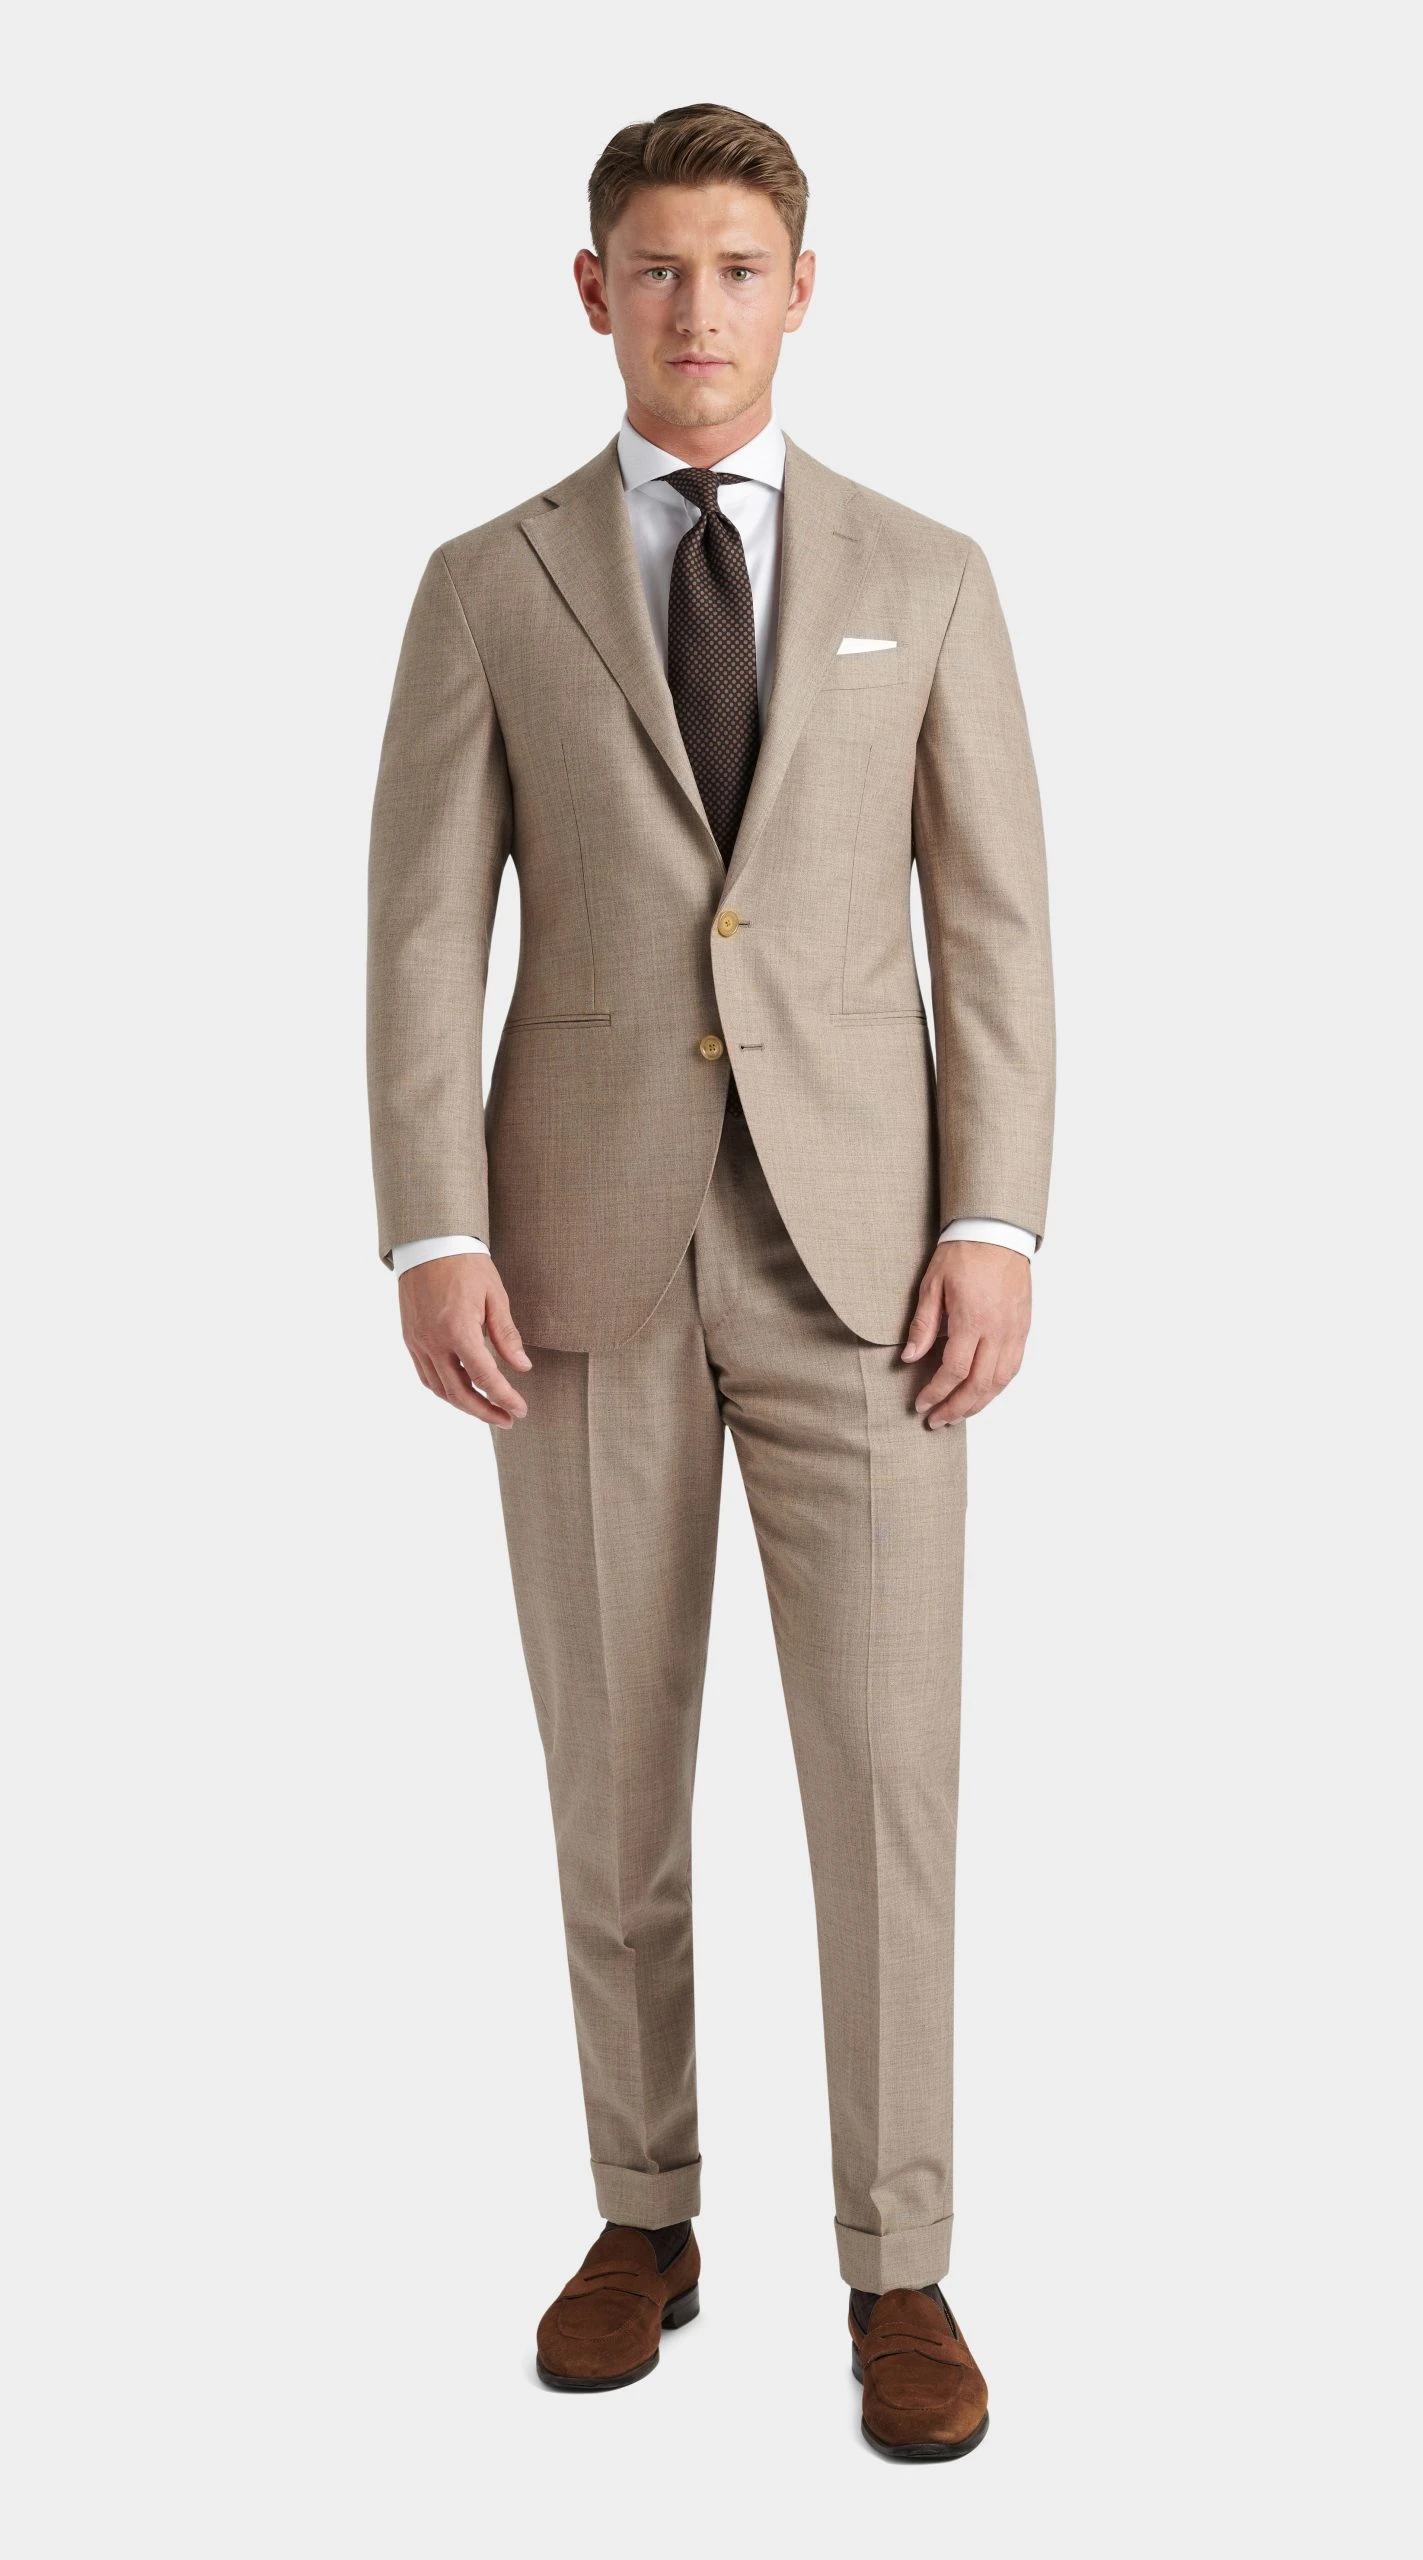 NEW beige / tan suit in twistair fabric